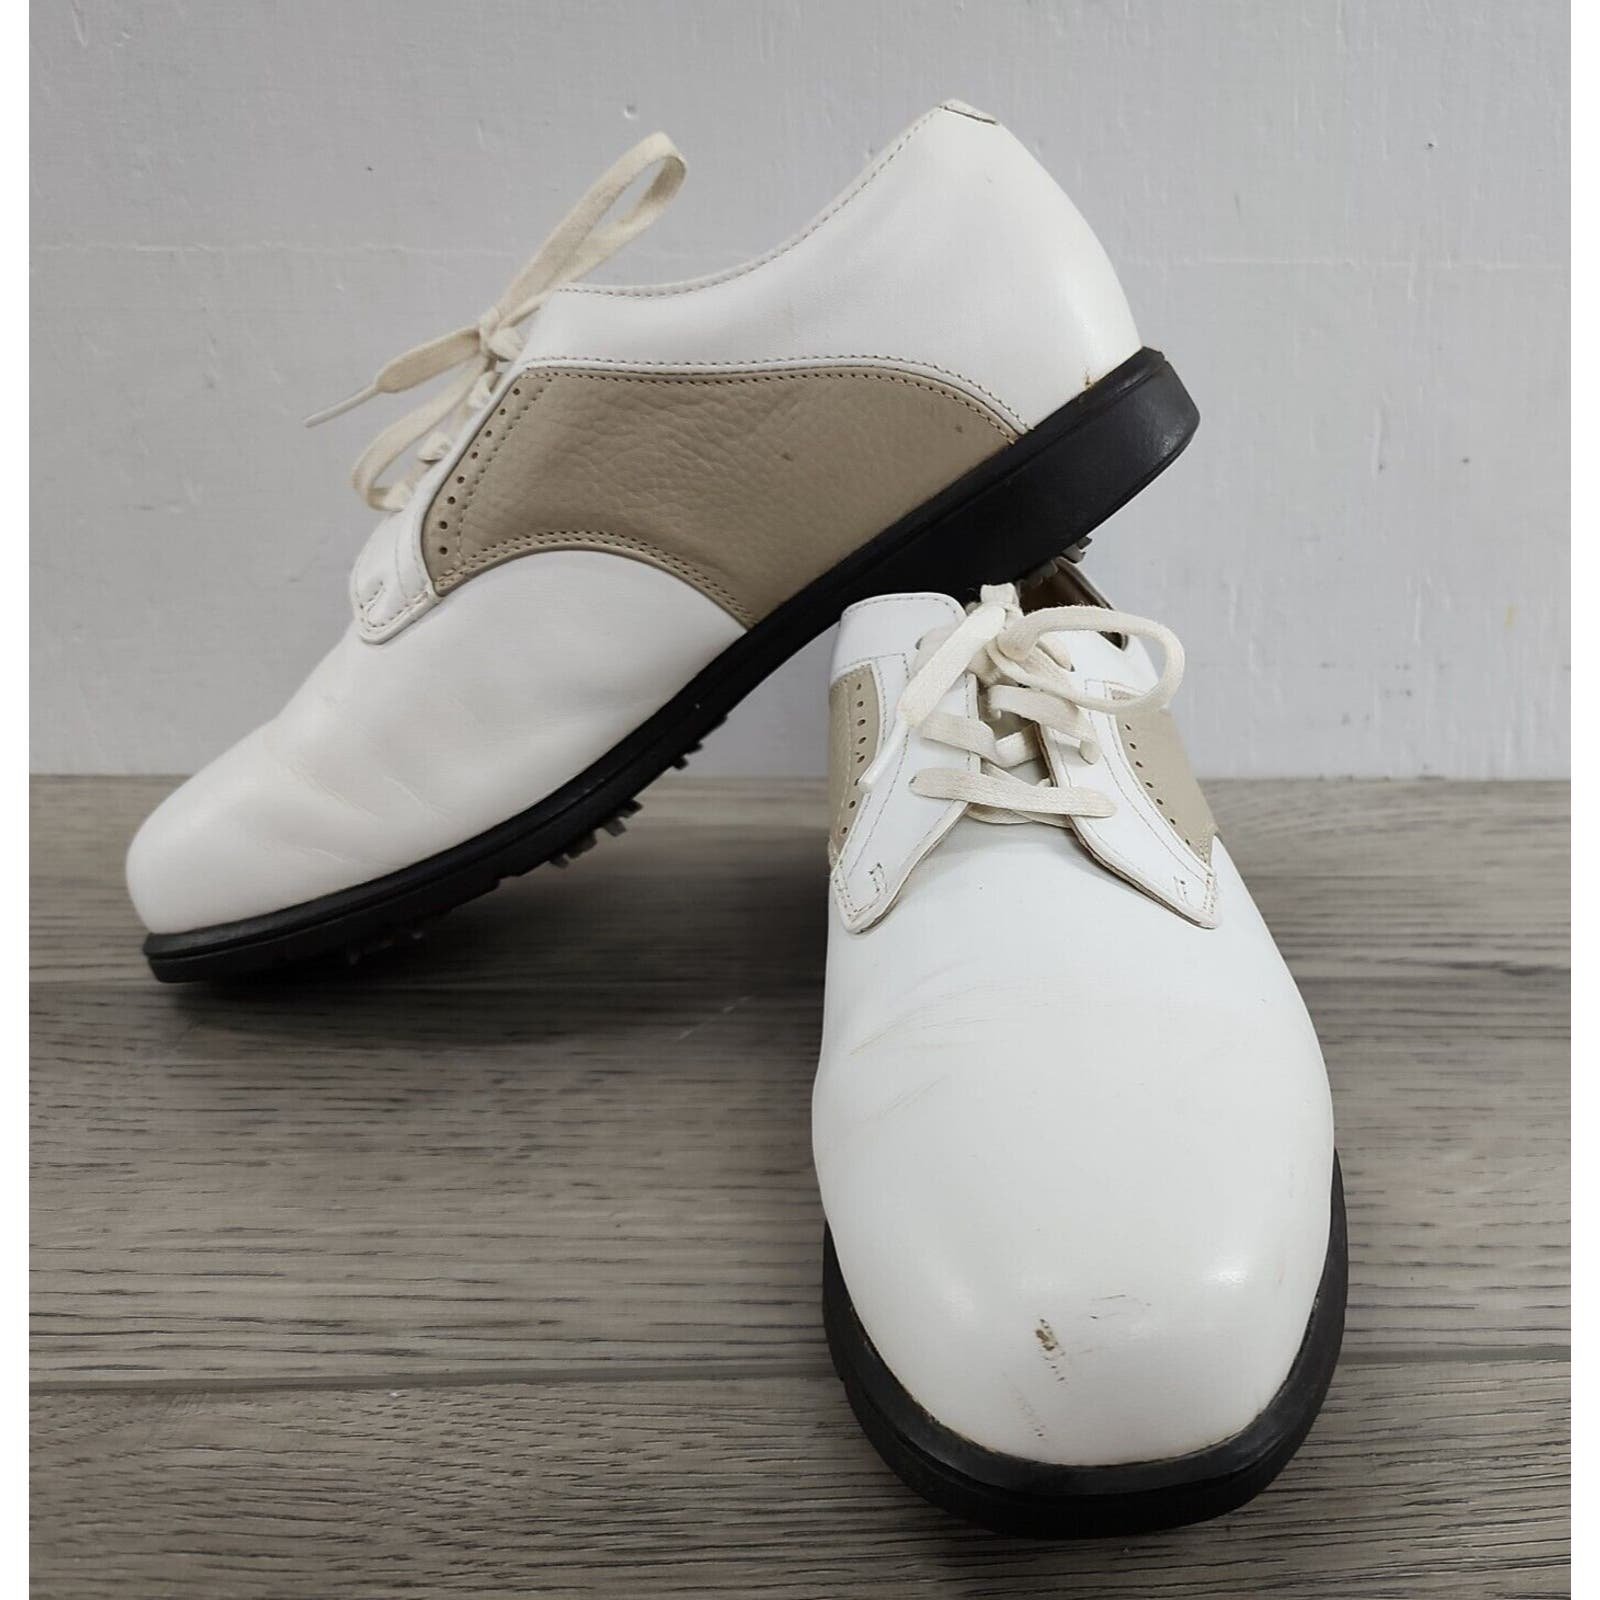 Women´s Nike Golf Verdana Last 192093-122 White/Tan Leather Golf Shoes - Size 8 RbvFH6IQS